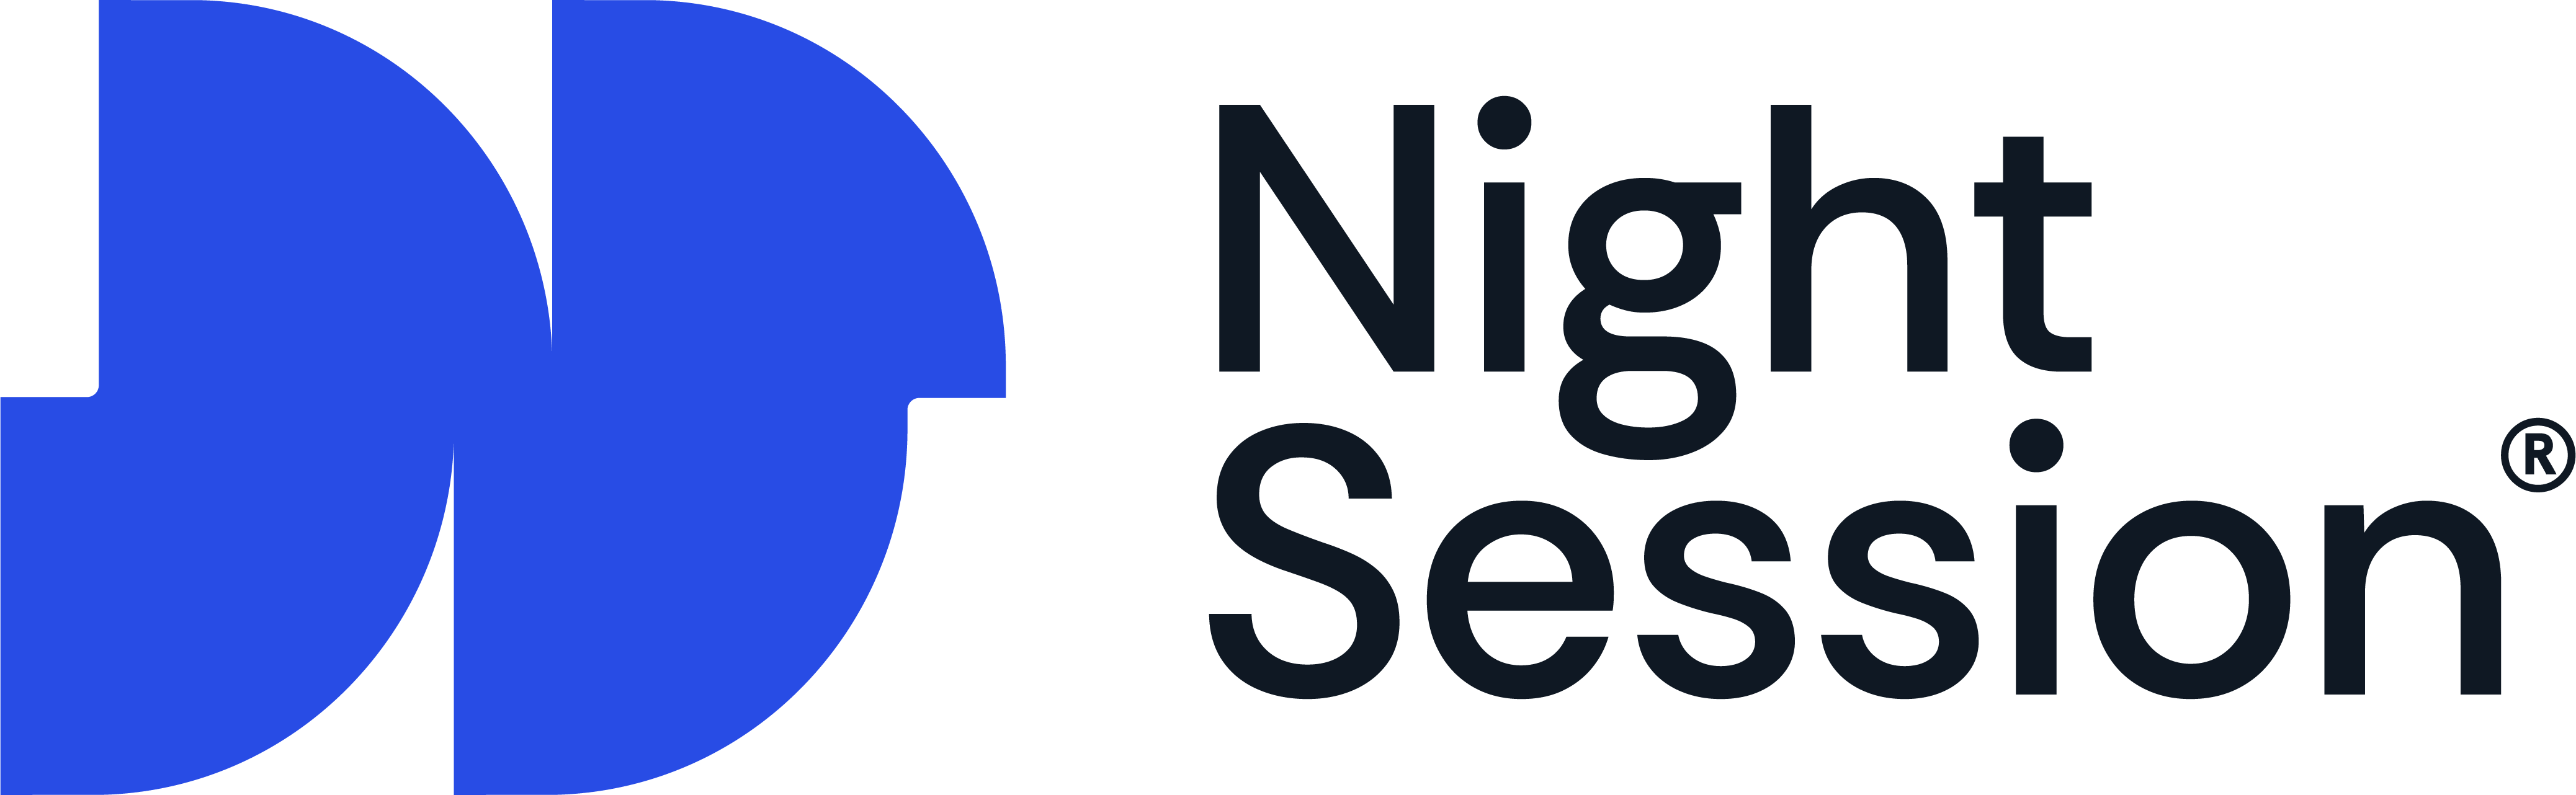 Night Session logo